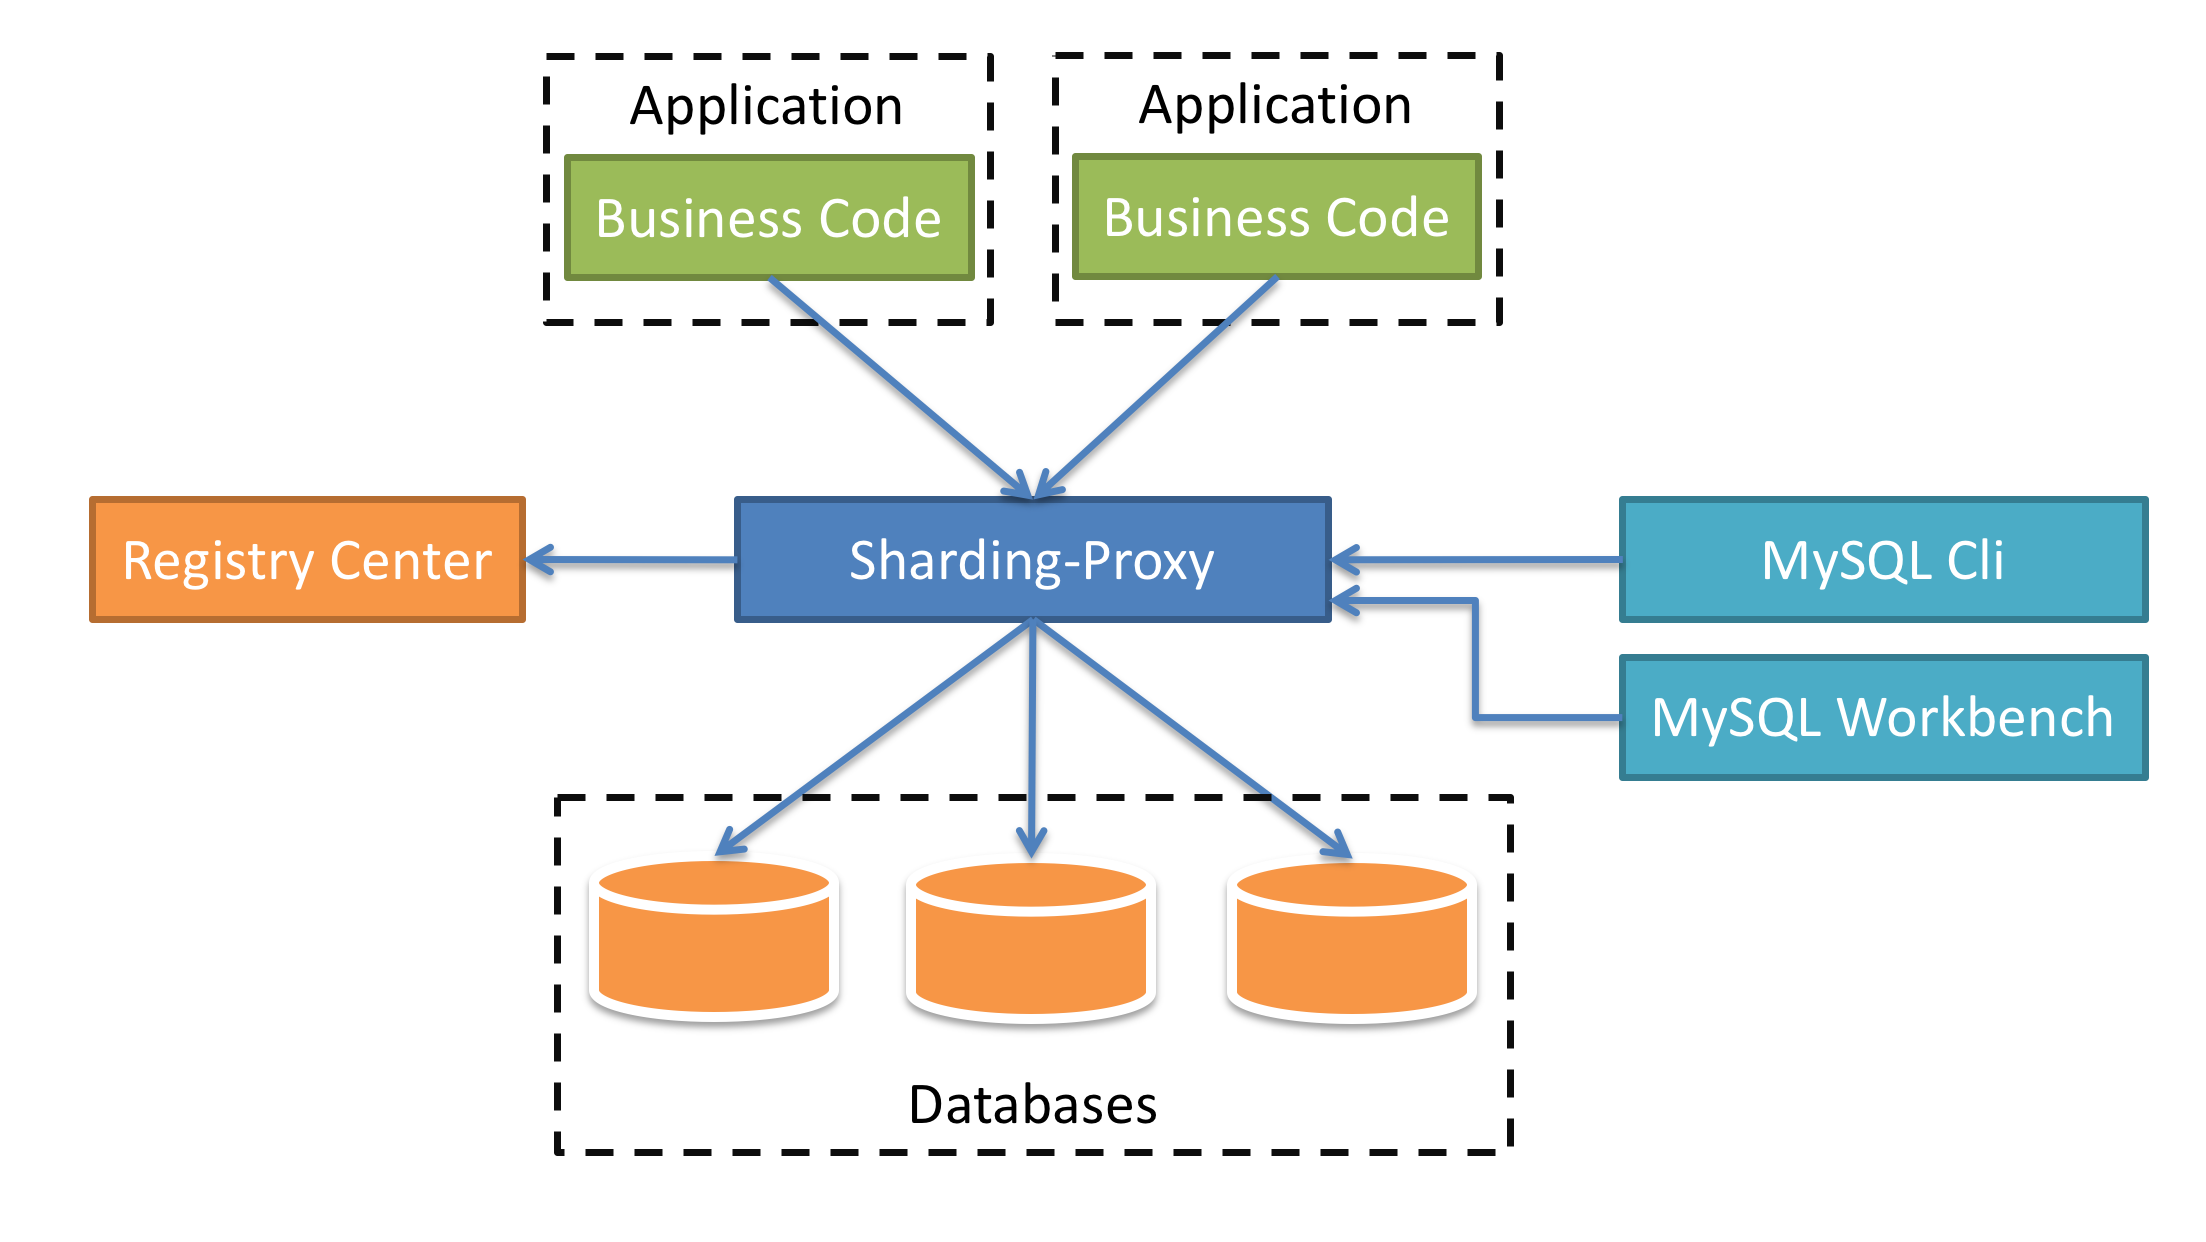 ShardingSphere-Proxy Architecture